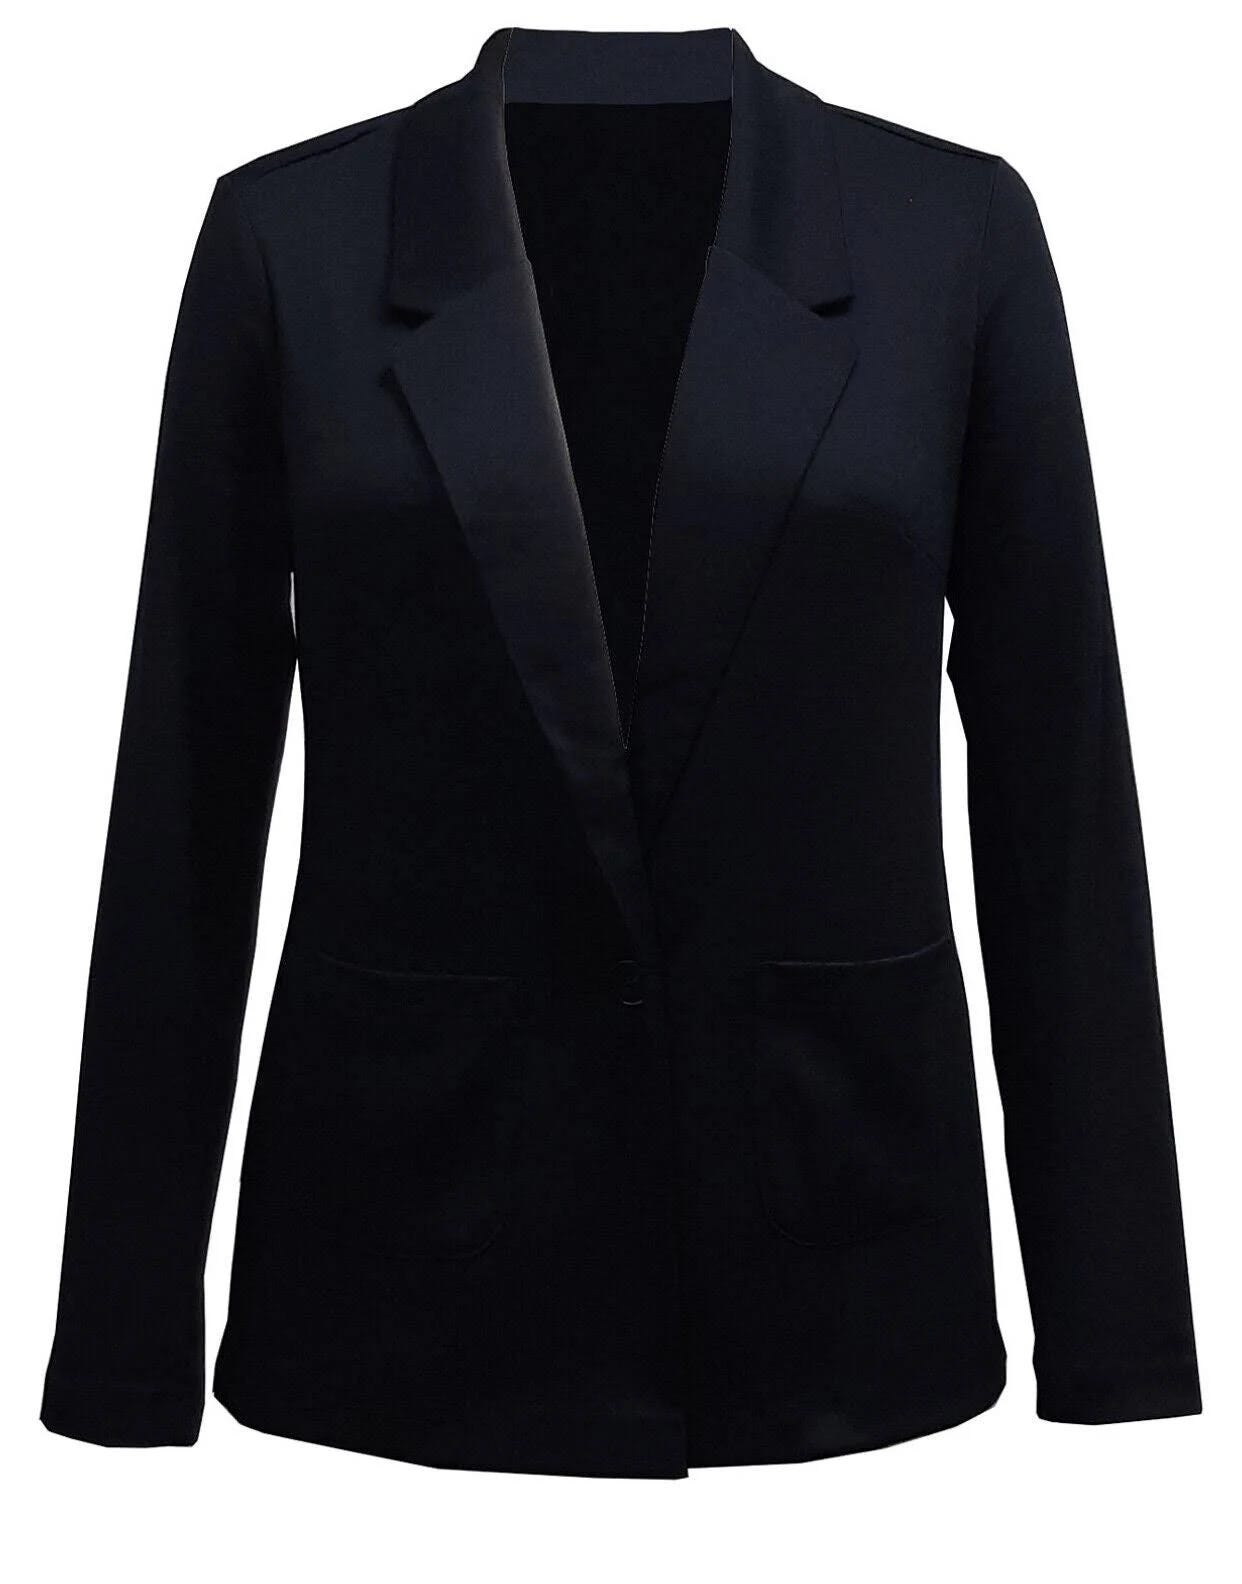 Elegant Women's Blazer for Professional Looks | Image